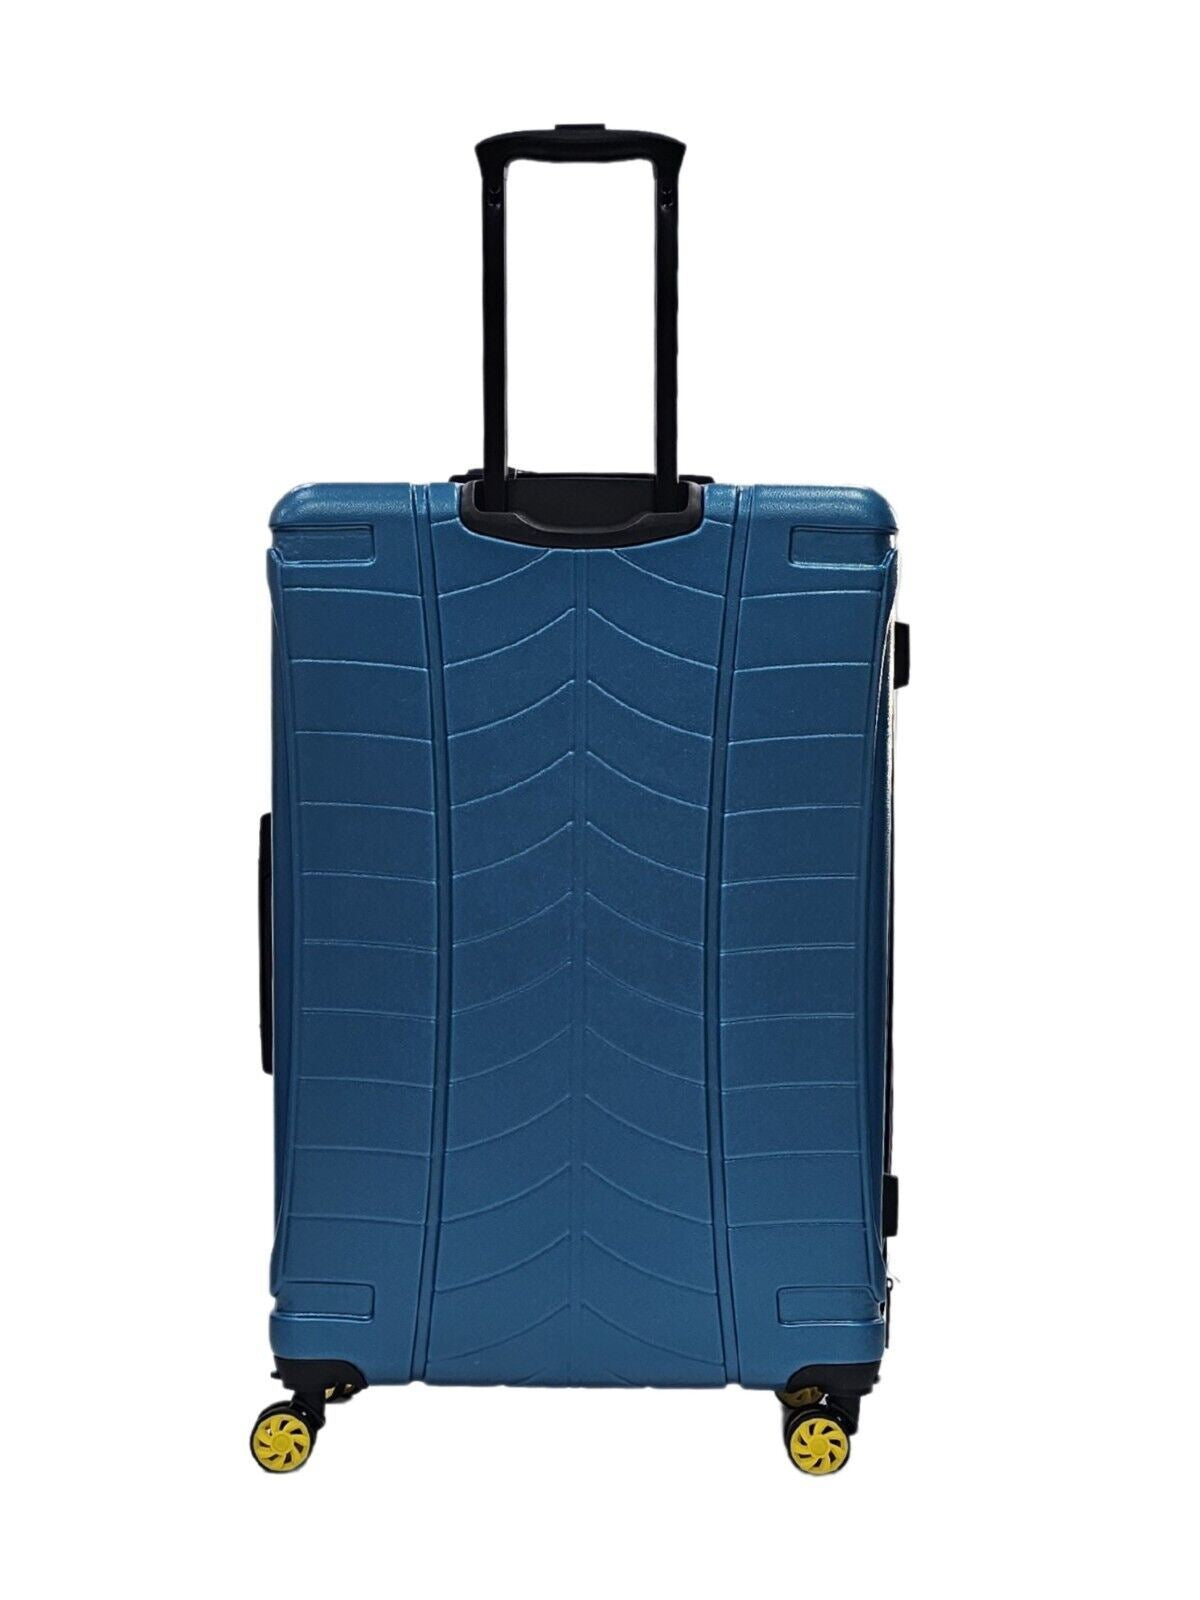 Hard Shell Blue Cabin Suitcase Set 4 Wheel Luggage Travel Bag